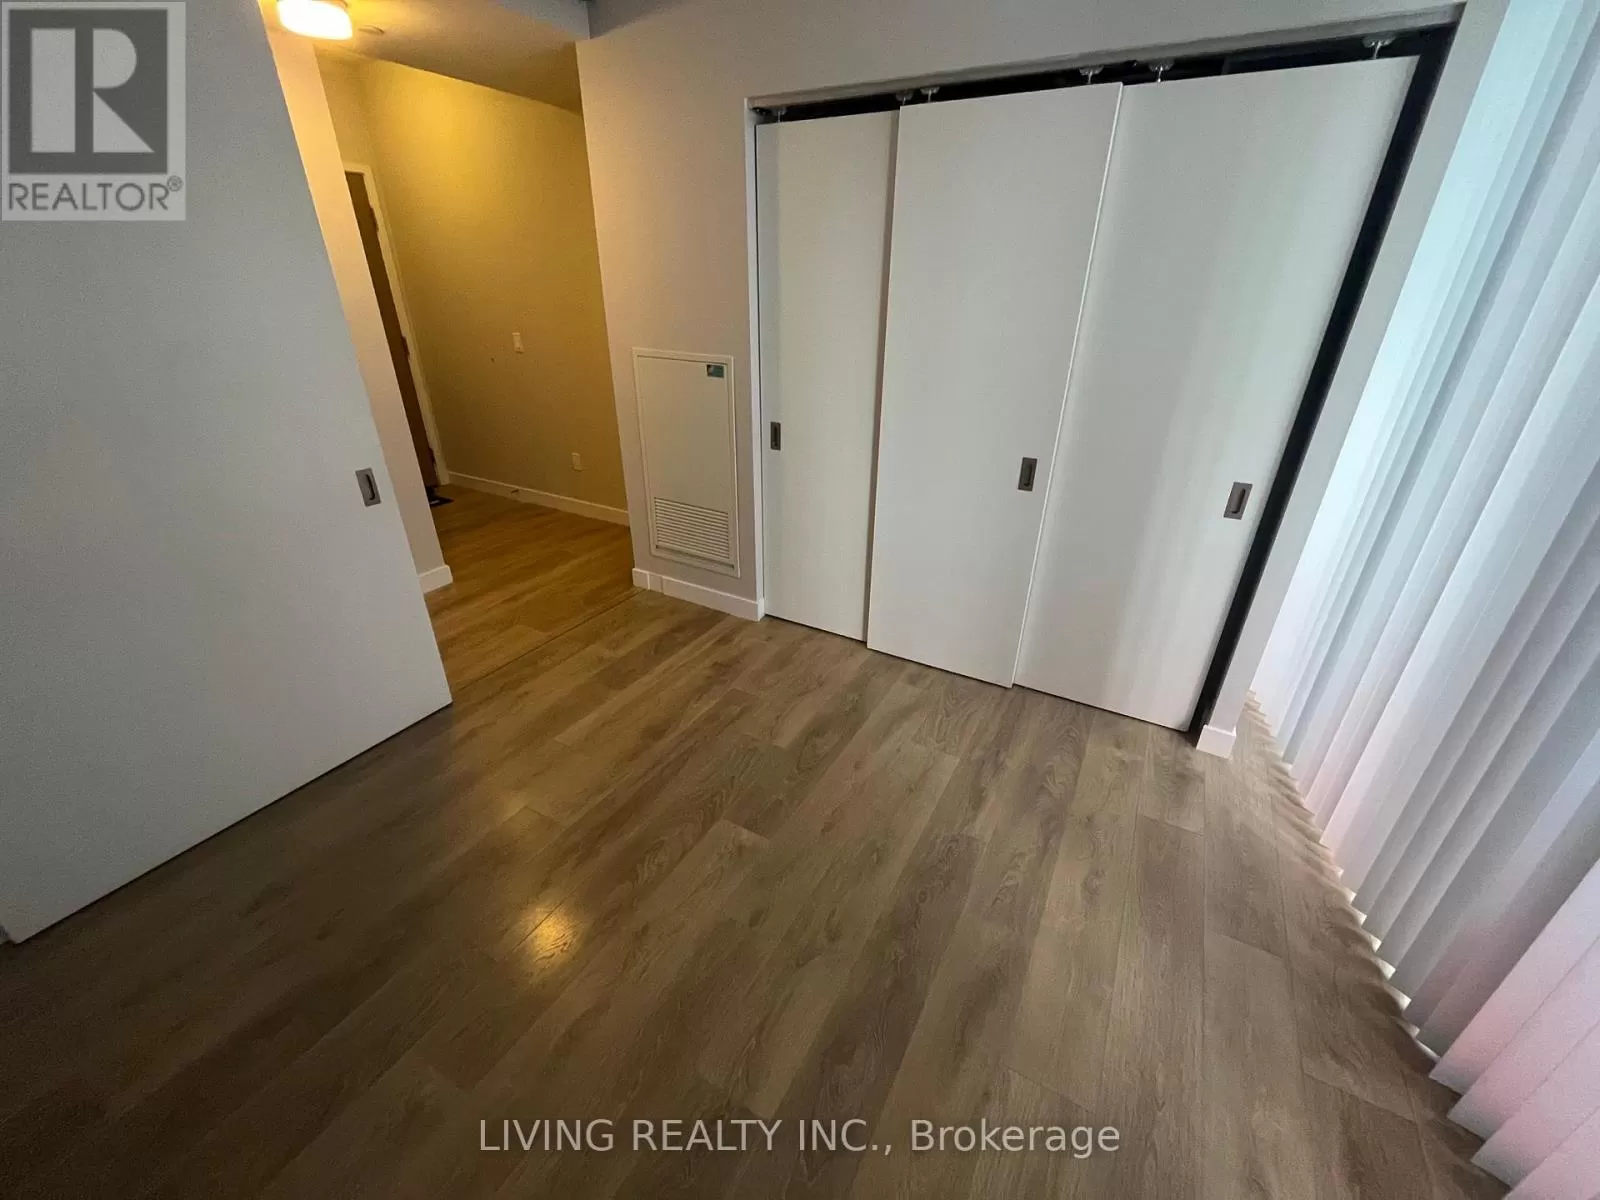 Apartment for rent: 1108 - 215 Queen Street W, Toronto, Ontario M5V 0P5